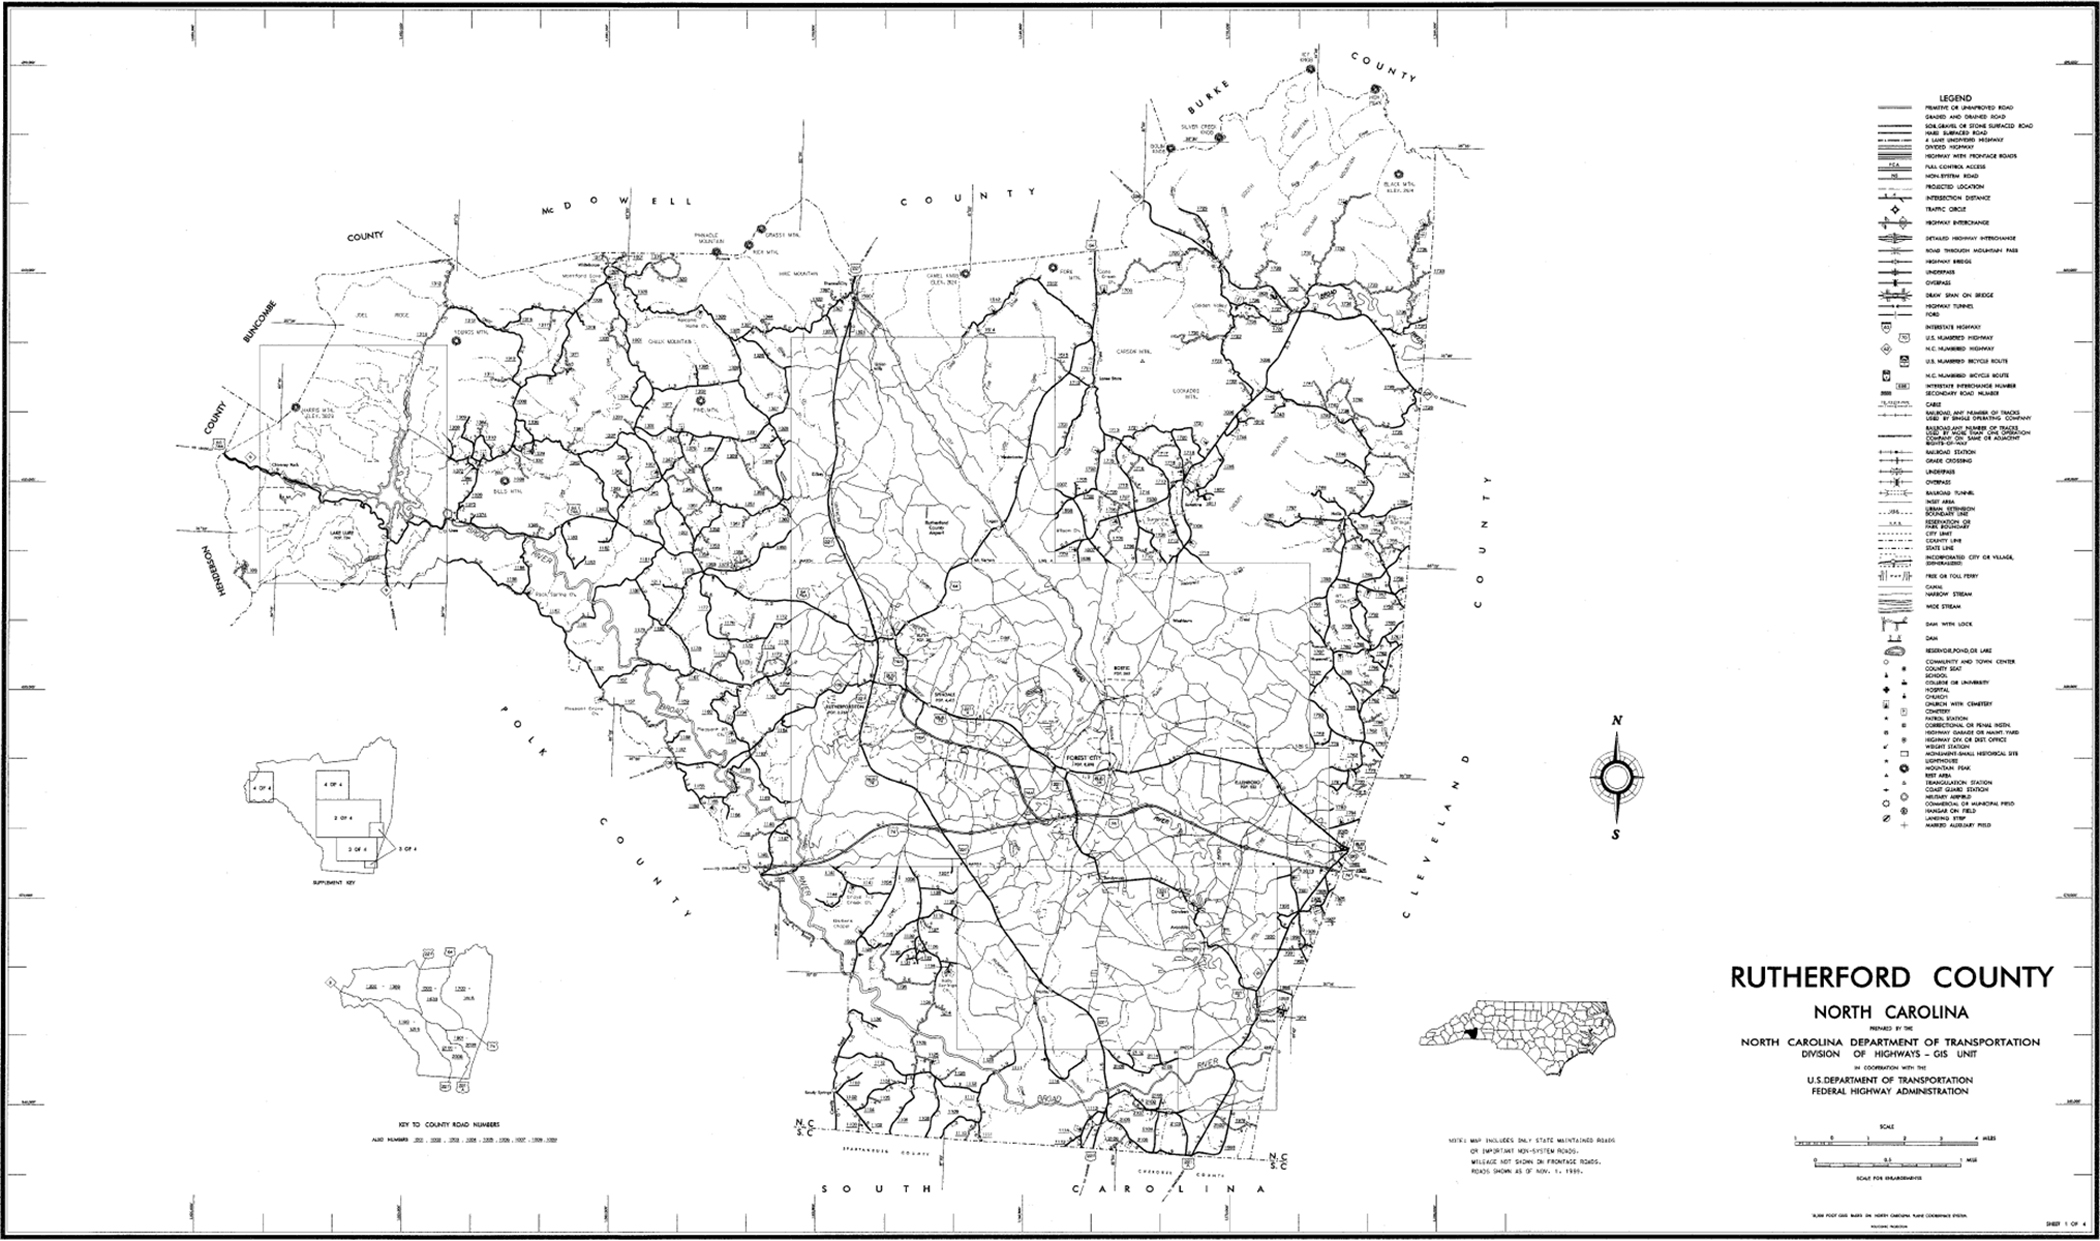 2000-road-map-of-rutherford-county-north-carolina